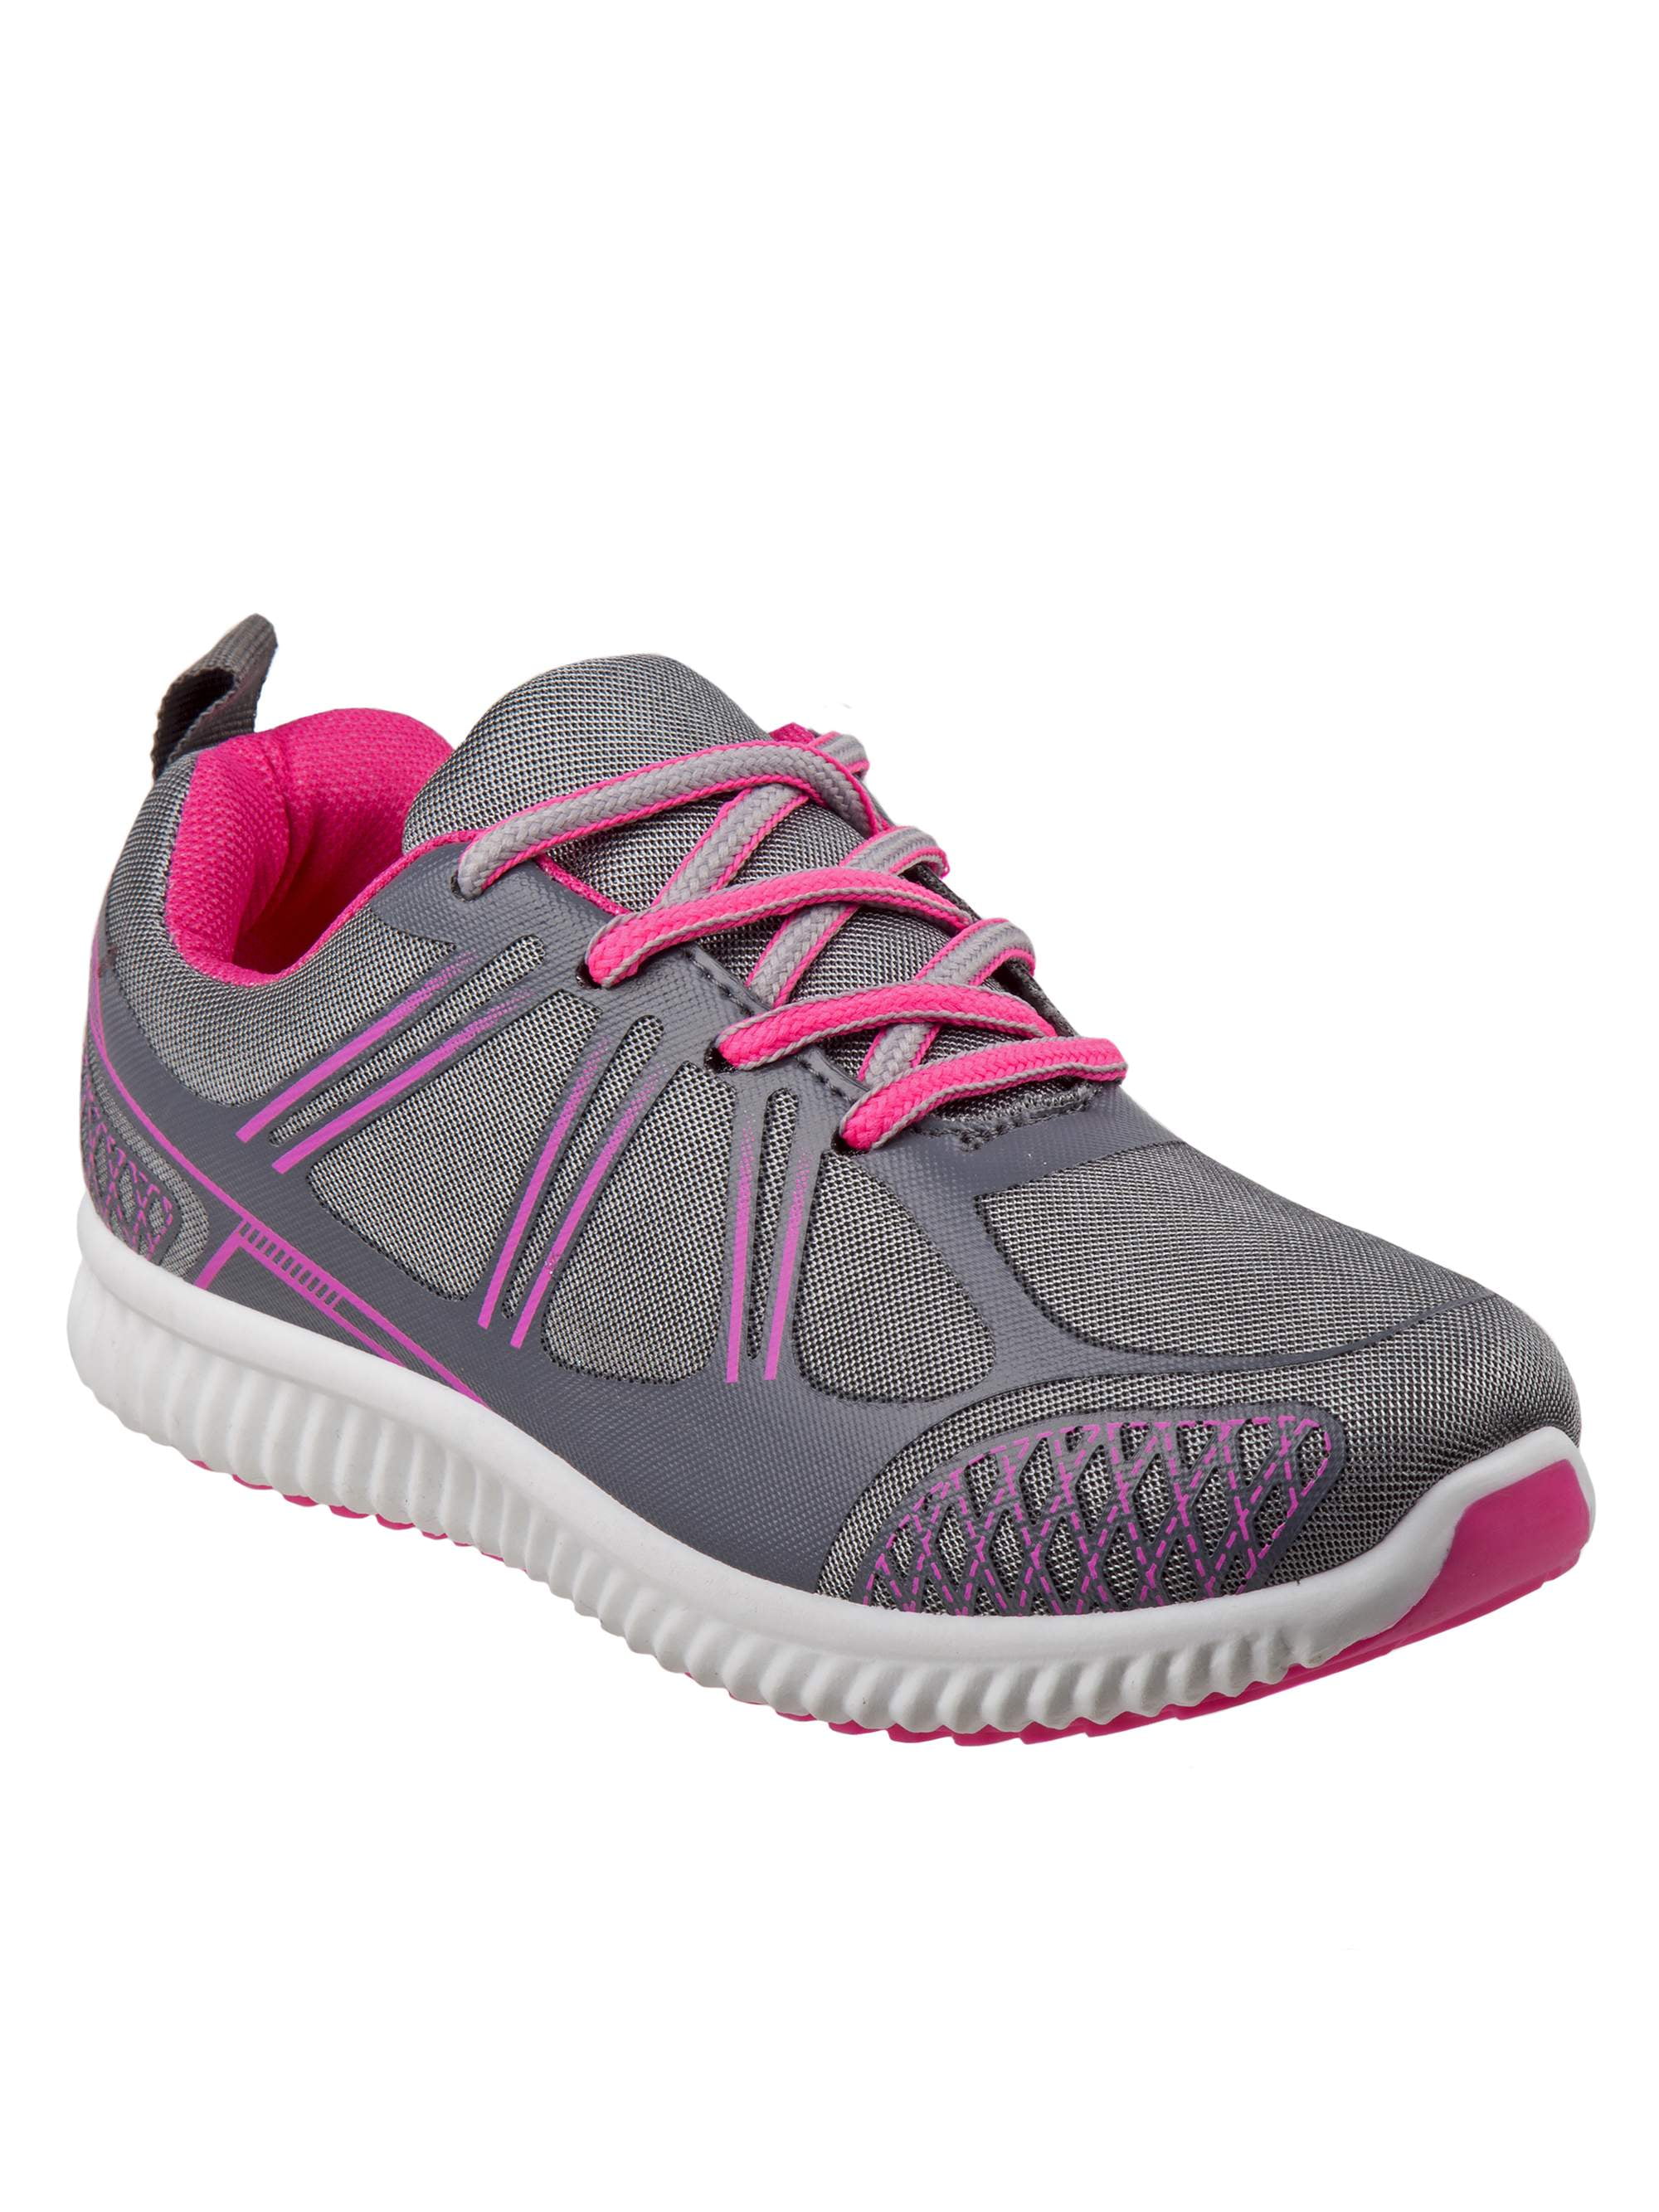 Josmo Grey Fuchsia Casual Trendy Girls' Sneakers - Walmart.com